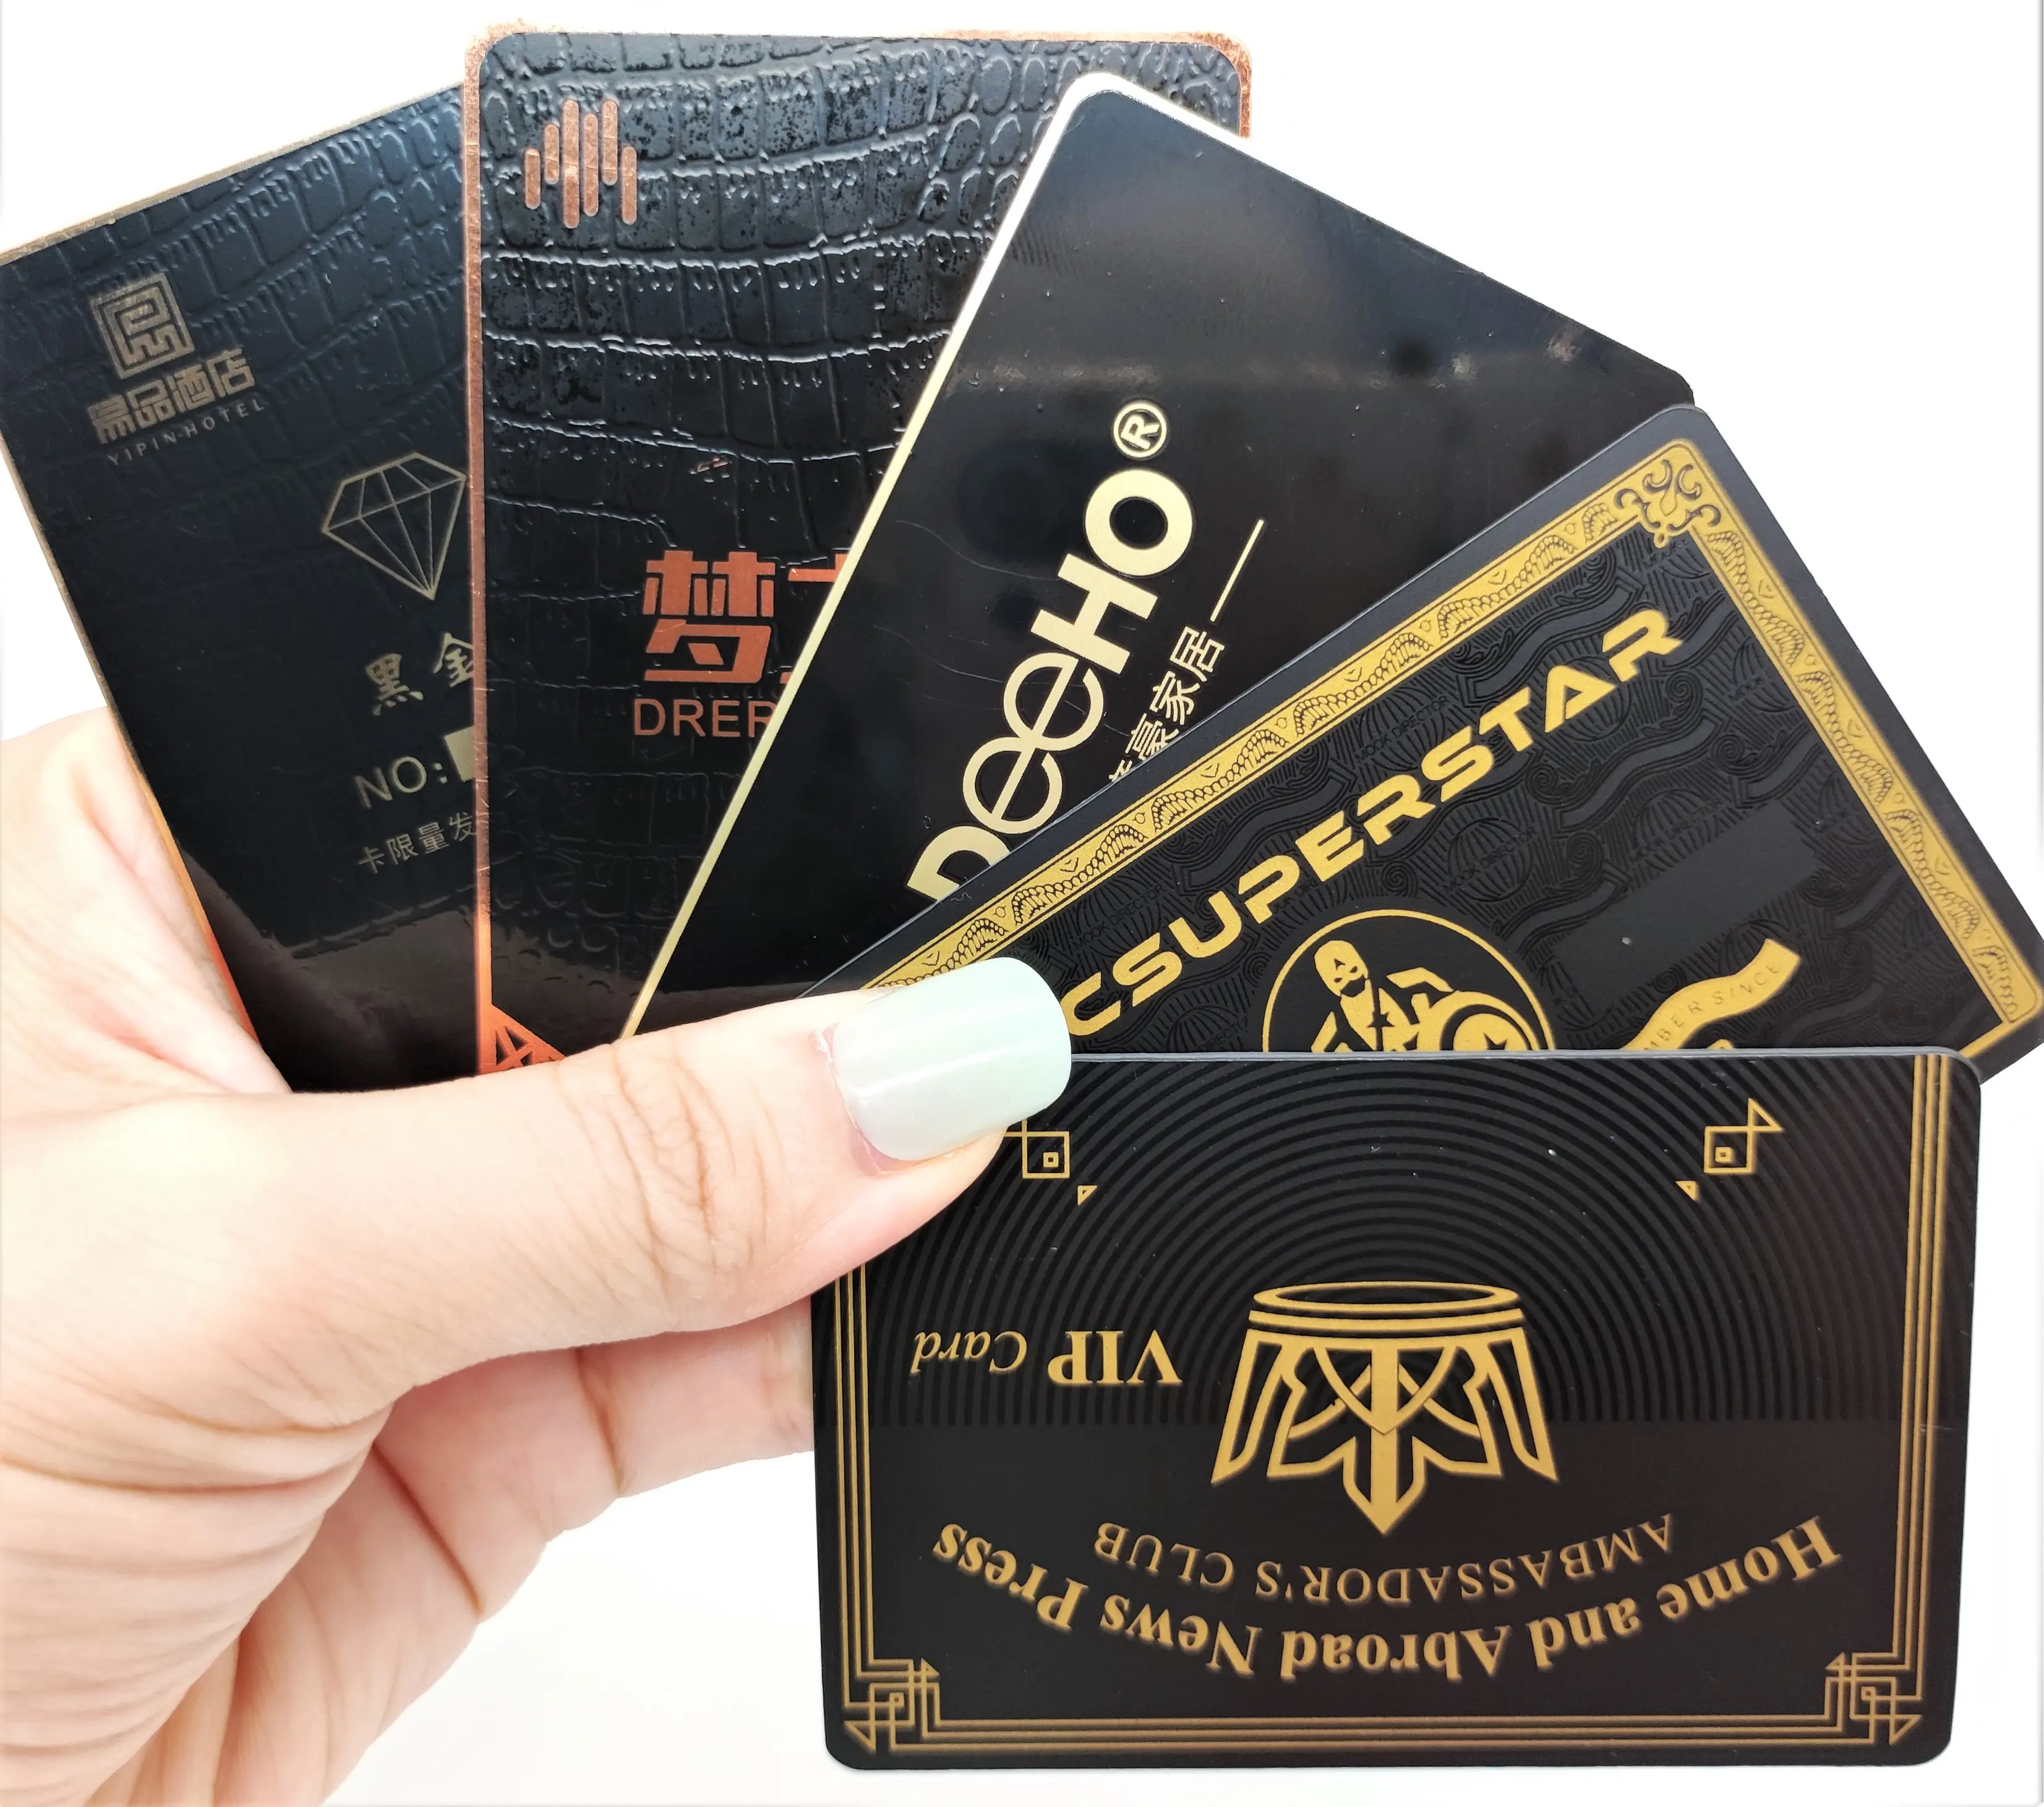 कस्टम सस्ते स्टेनलेस स्टील लेजर उत्कीर्णन कट धातु रिक्त क्रेडिट कार्ड काले कार्ड धातु व्यापार कार्ड